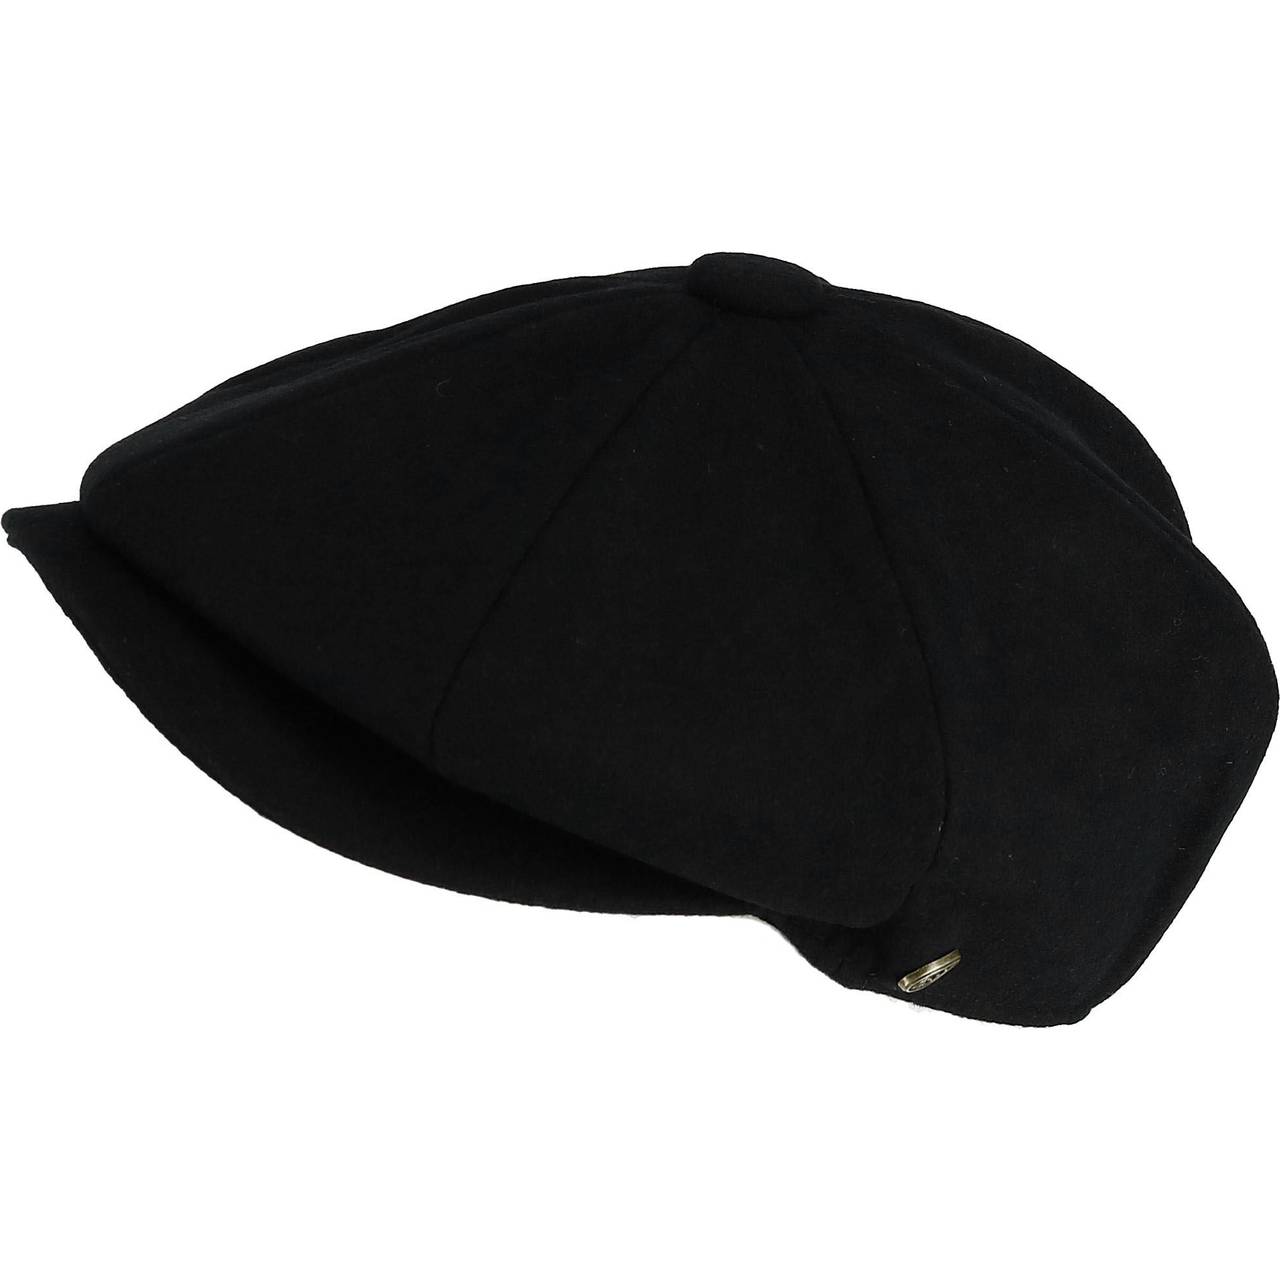 Epoch Hats Melton Quarter Newsboy Cap - Black • Price